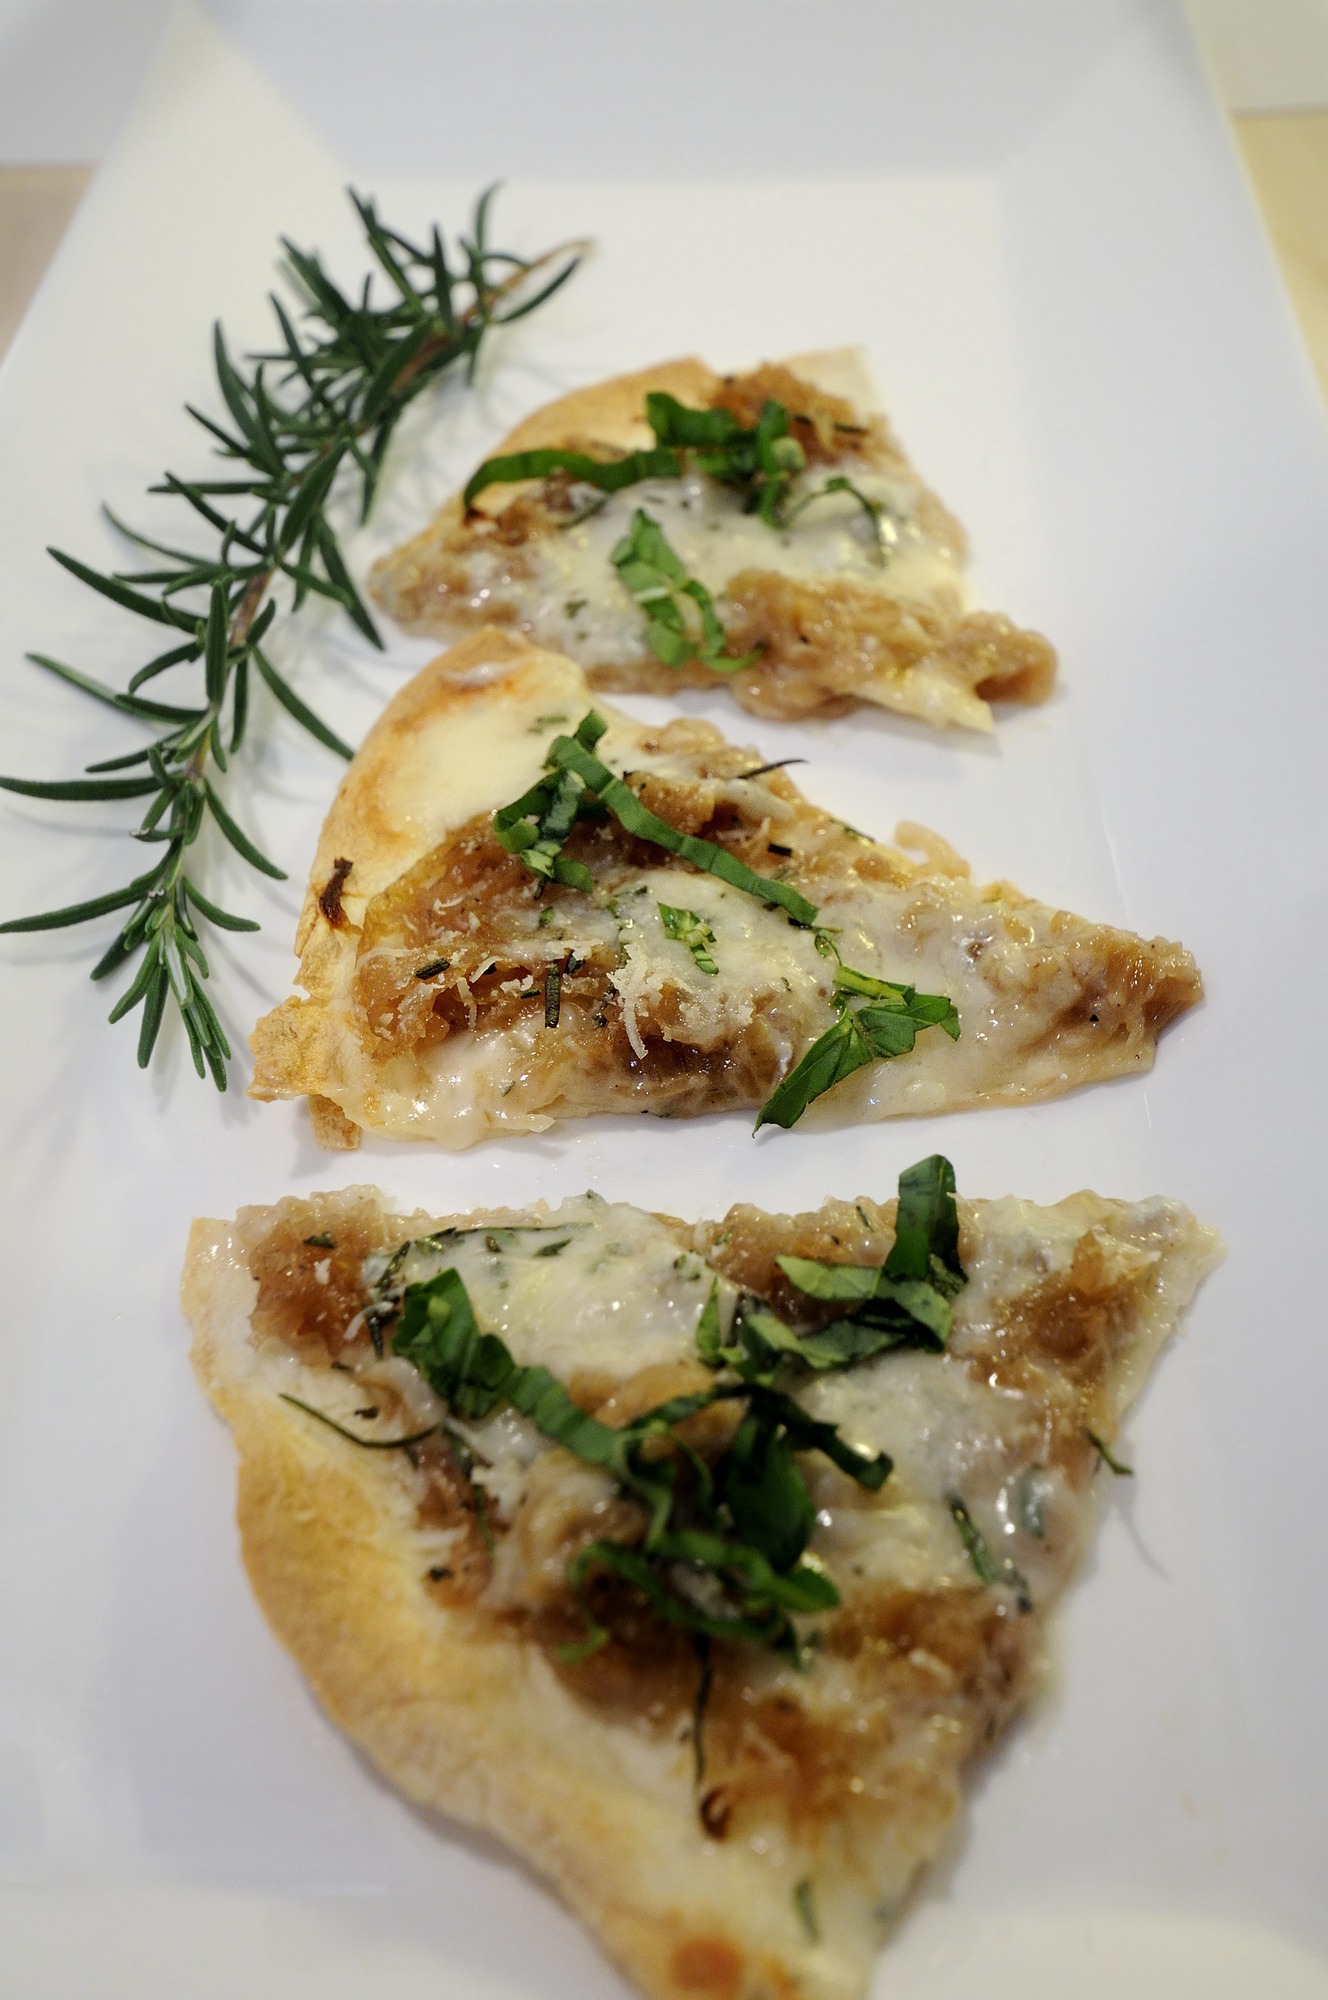 "Pizza" with Caramelized Onions & Gorgonzola, Rosemary Garnish